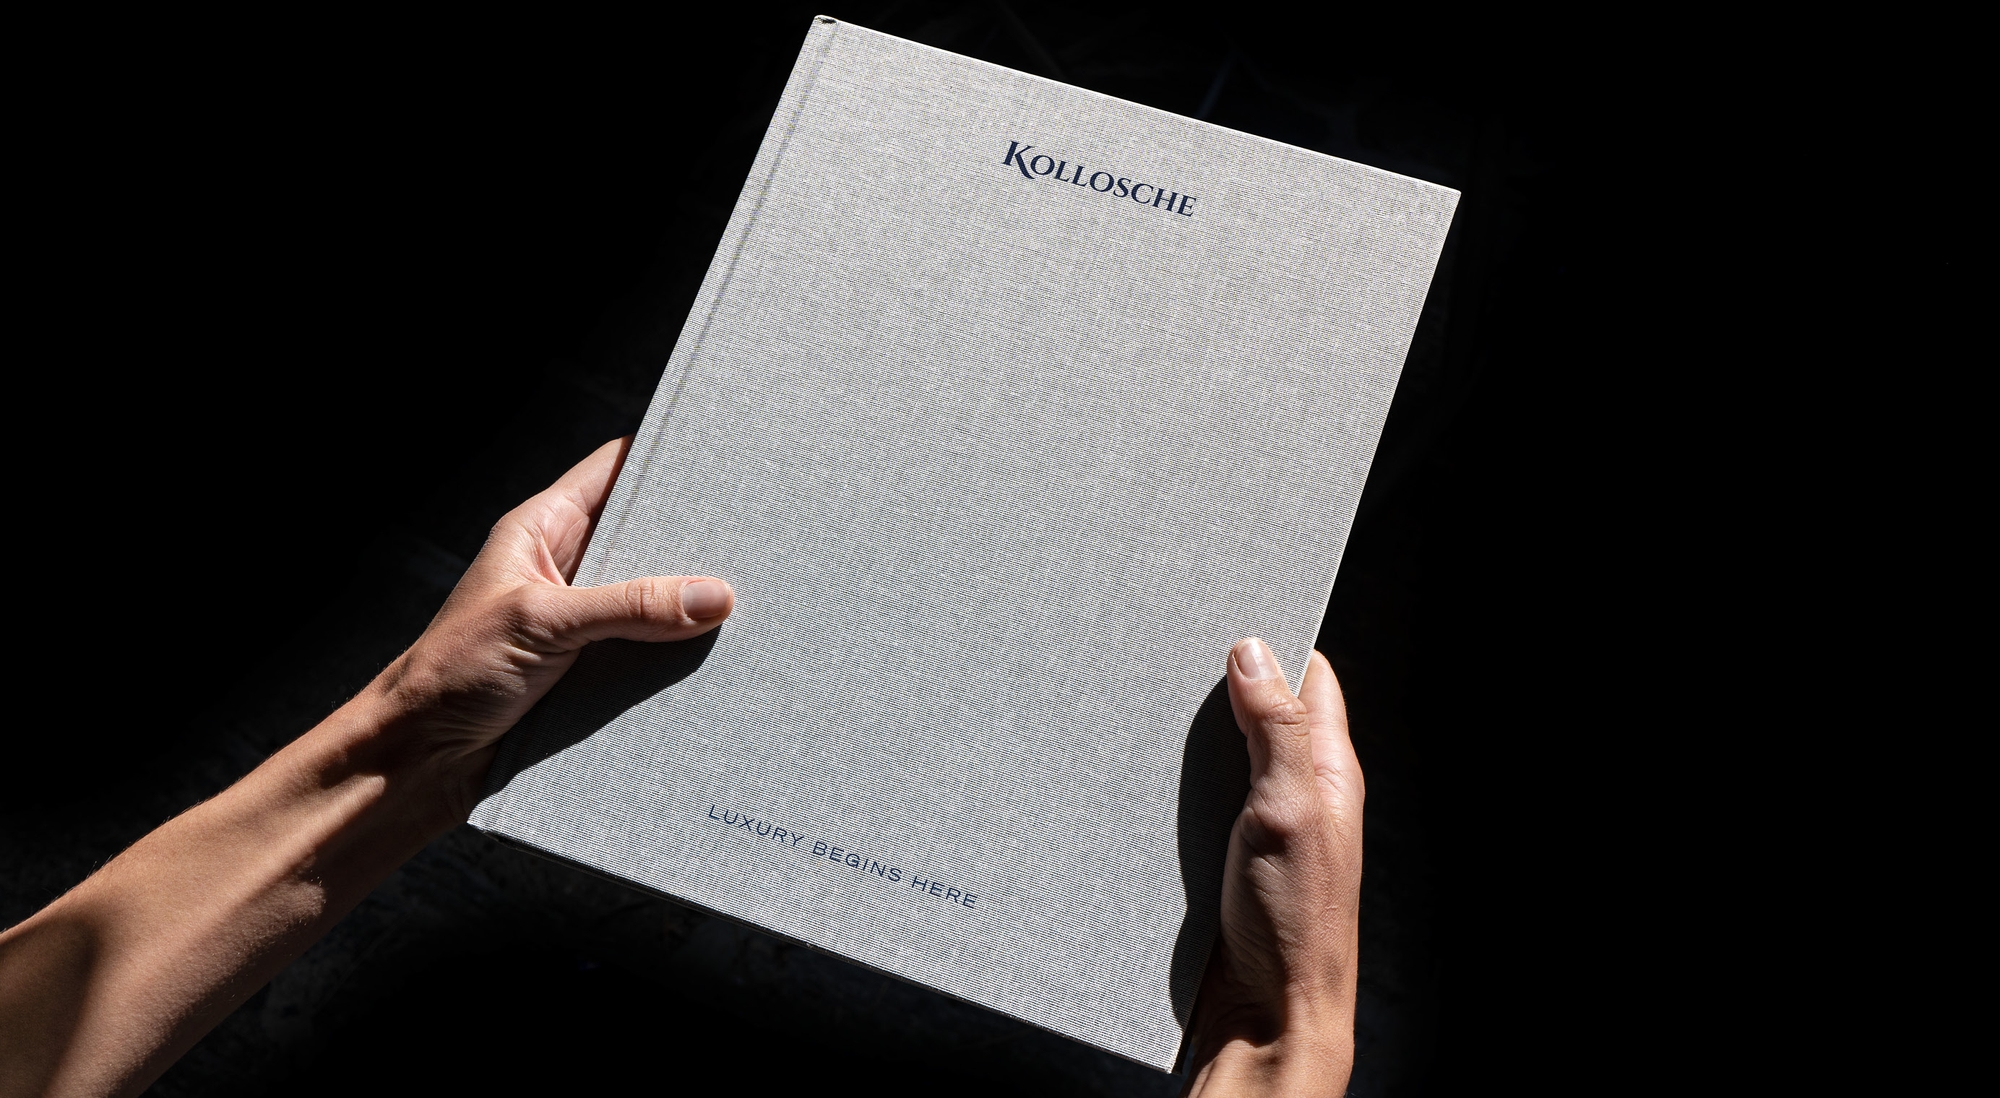 Kollosche Real Estate - A4 Projects Book - Print Advertising | Atollon - a design company